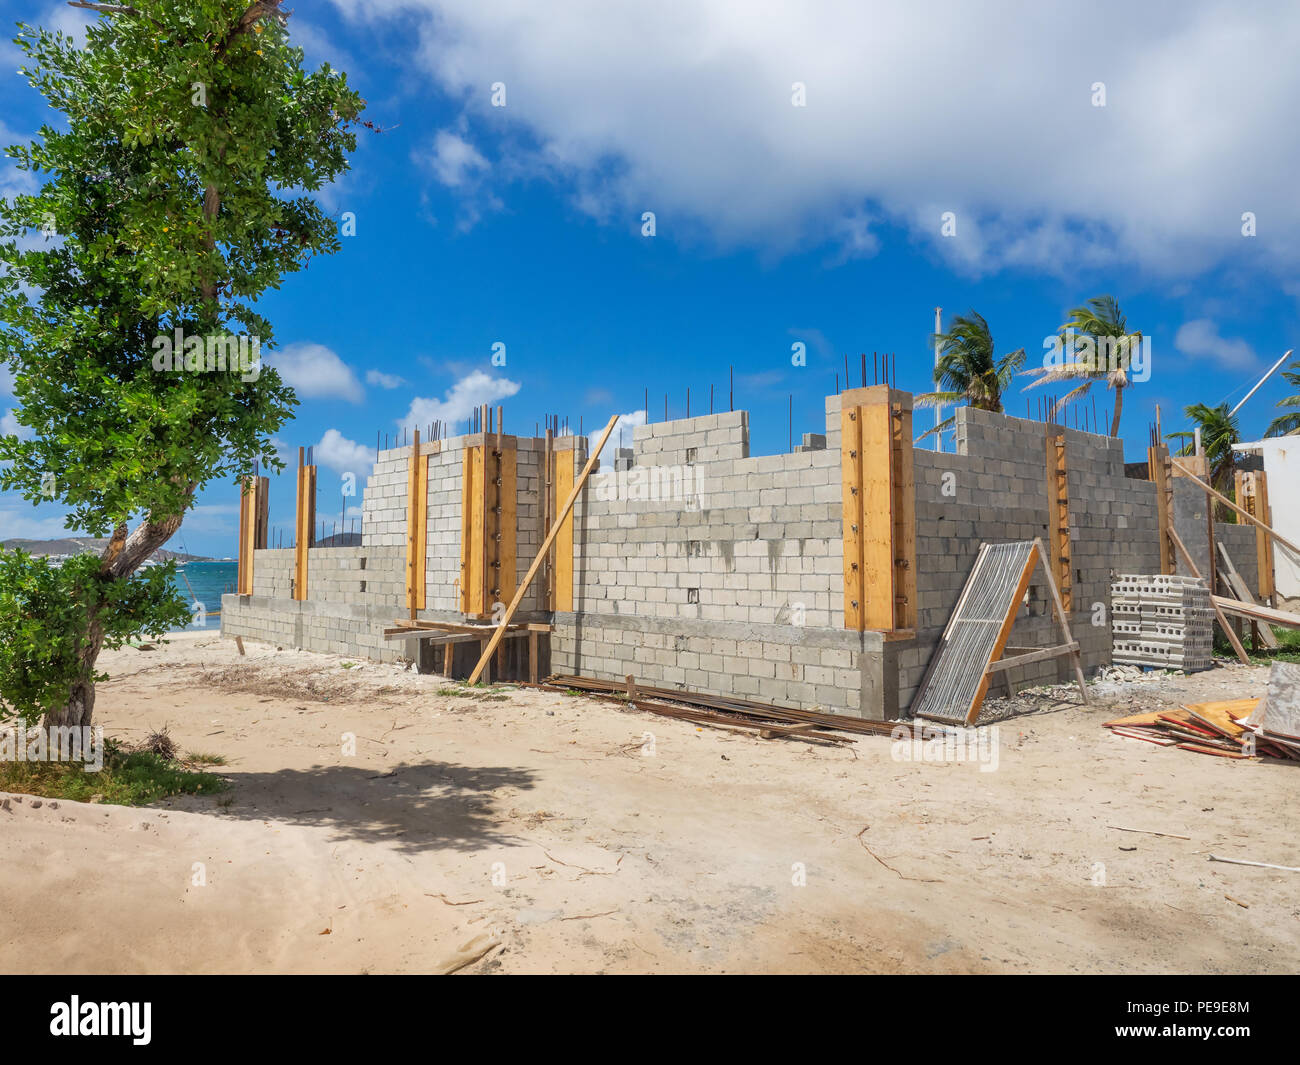 New cinder block house construction Stock Photo - Alamy